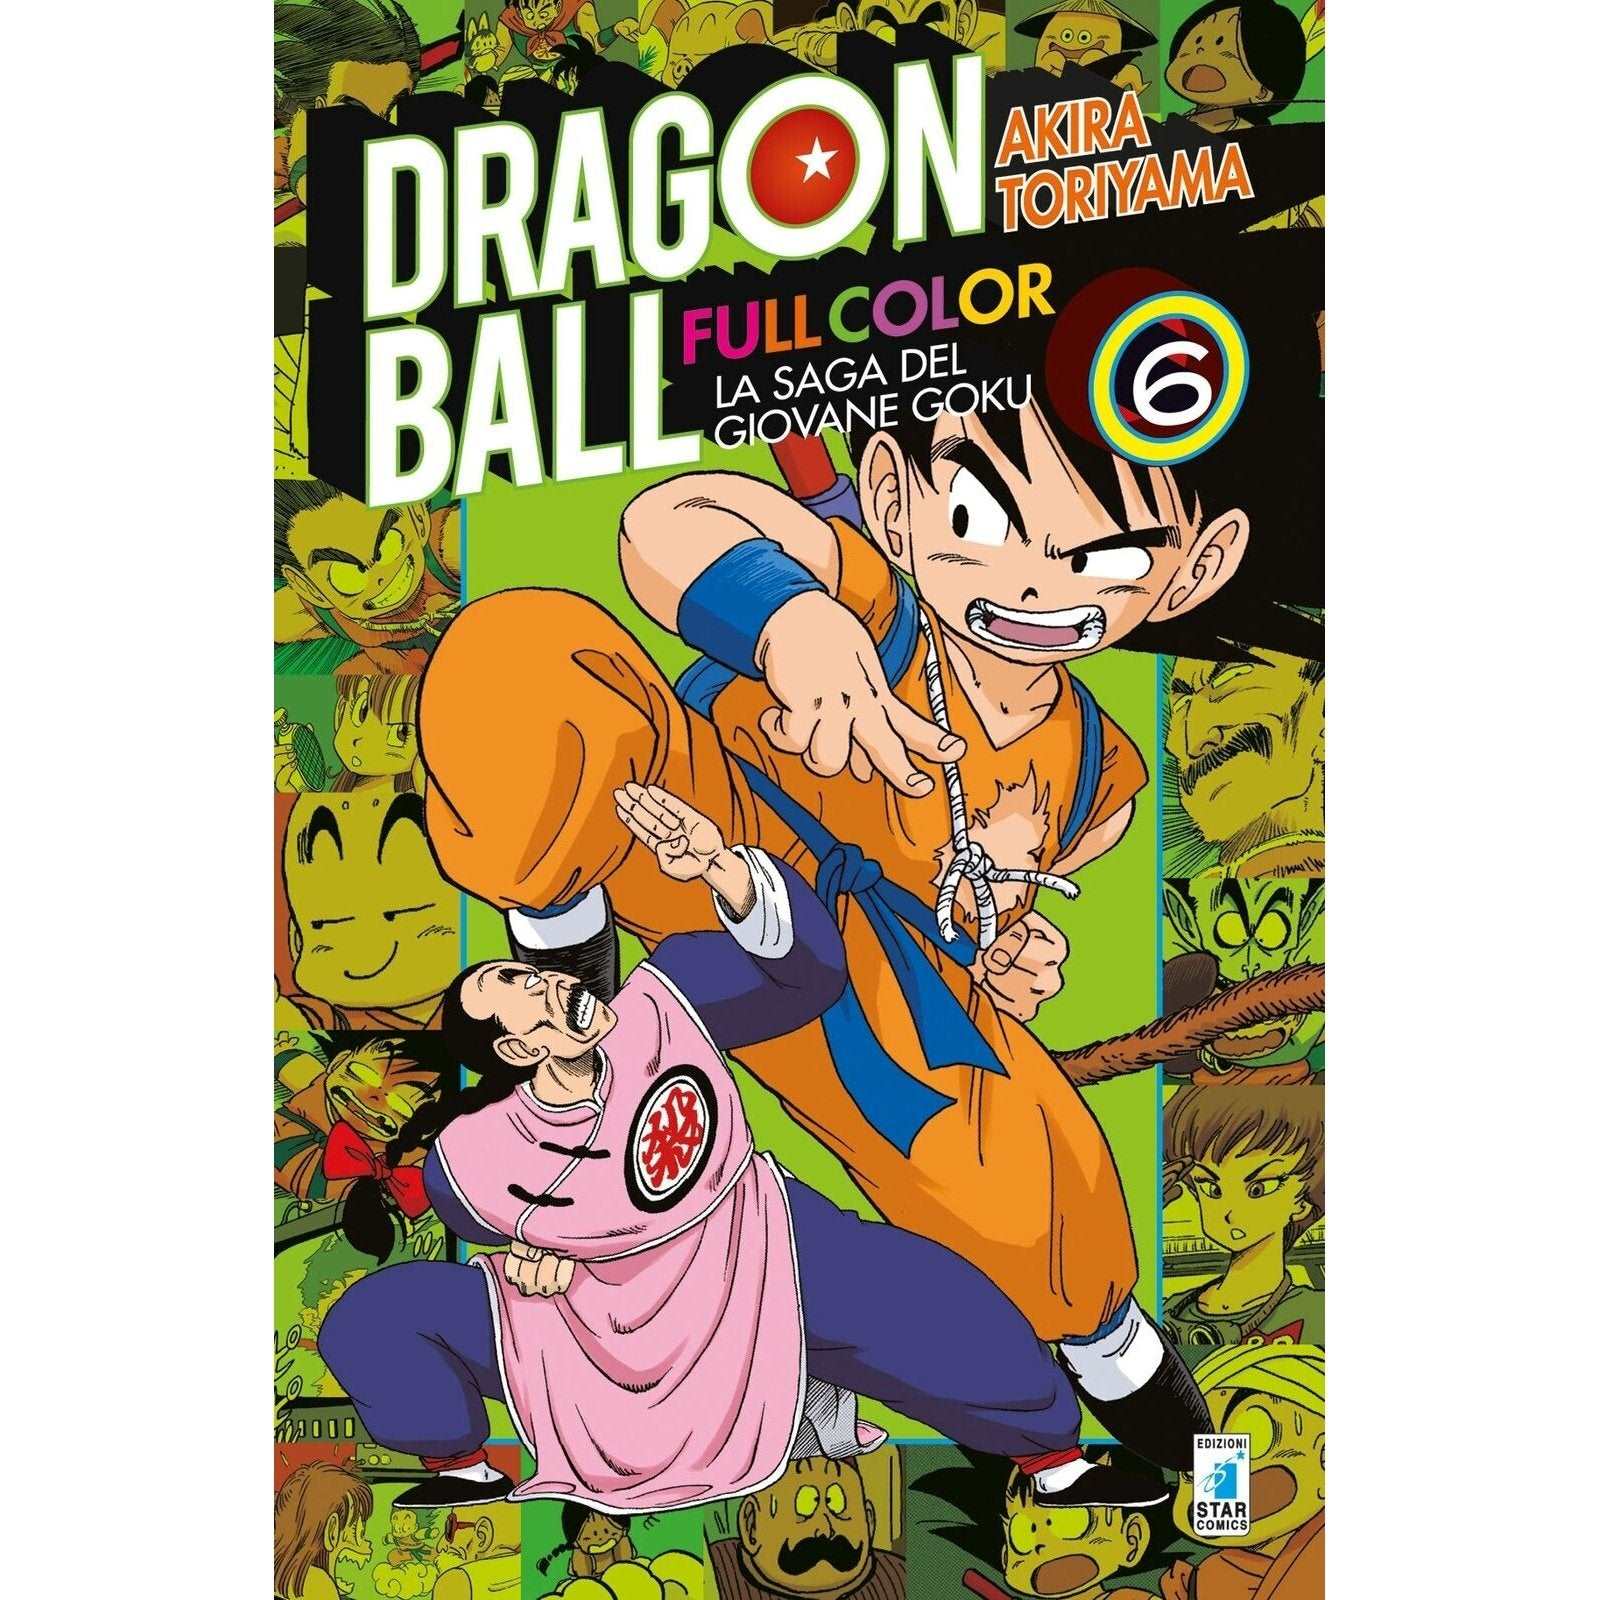 Dragon Ball Full Color - La Saga del Giovane Goku 06 ITA nerd-pug